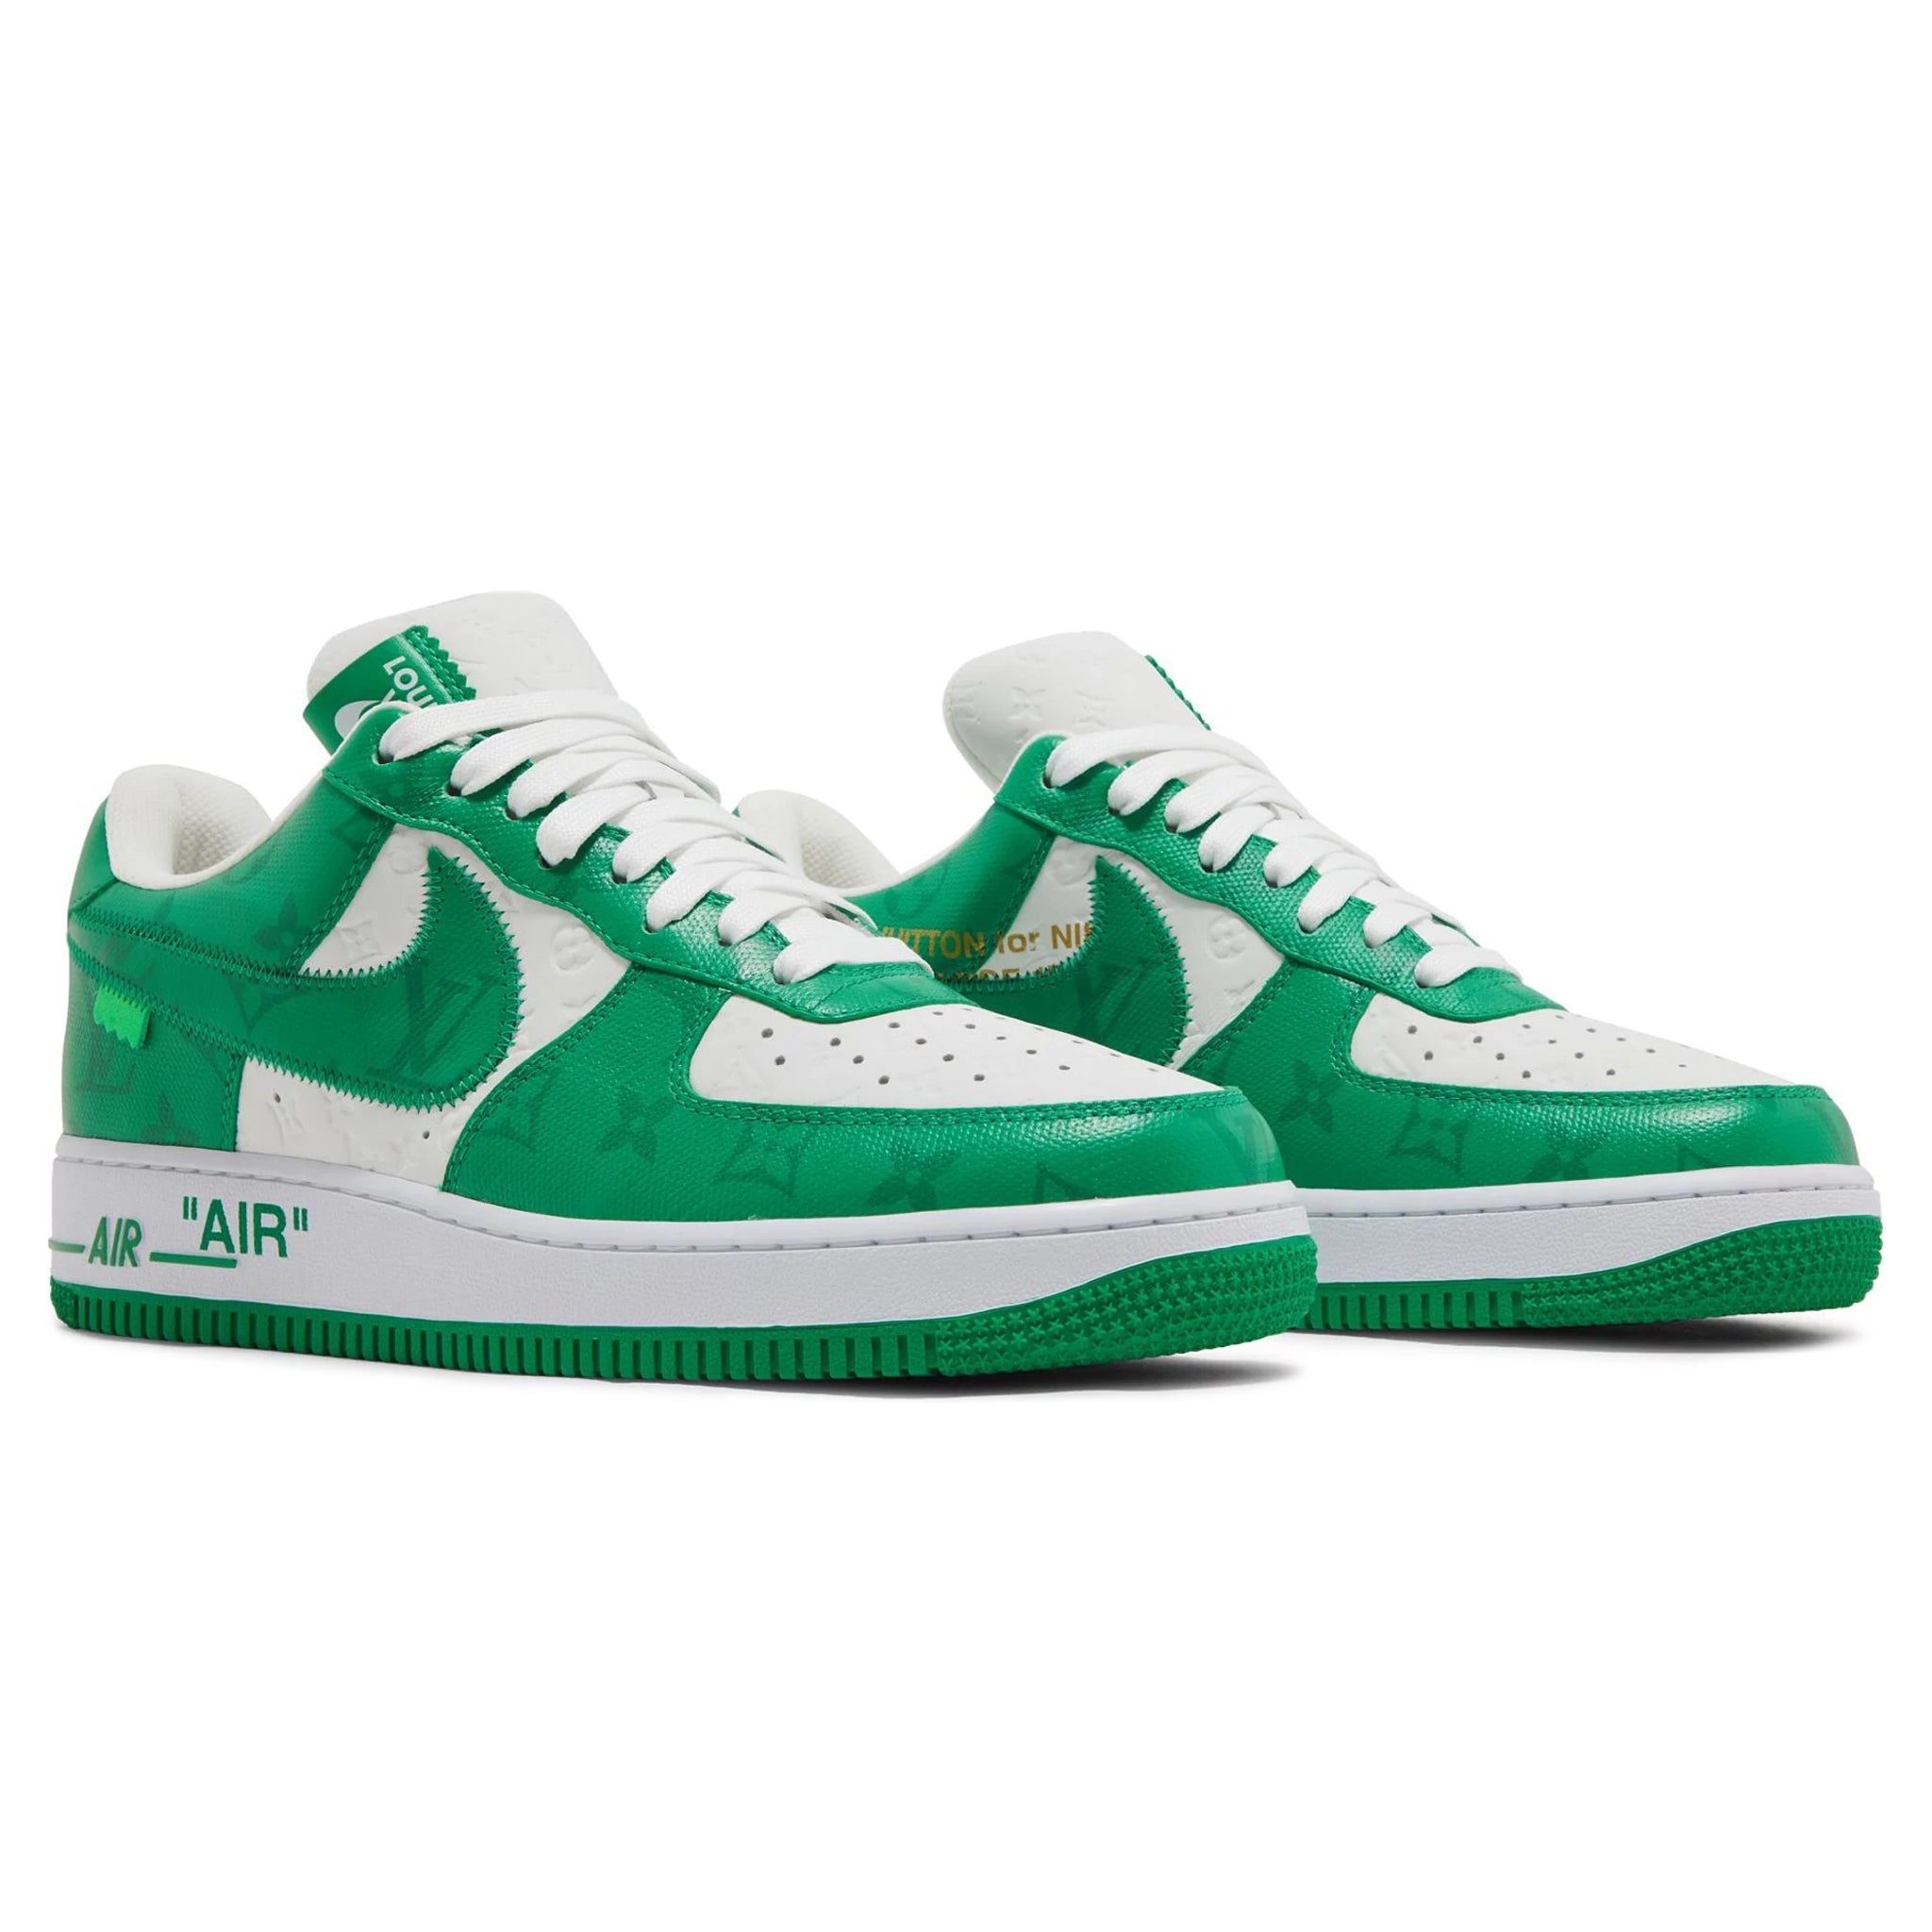 Giày Nike Air Force 1 Low Louis Vuitton Green